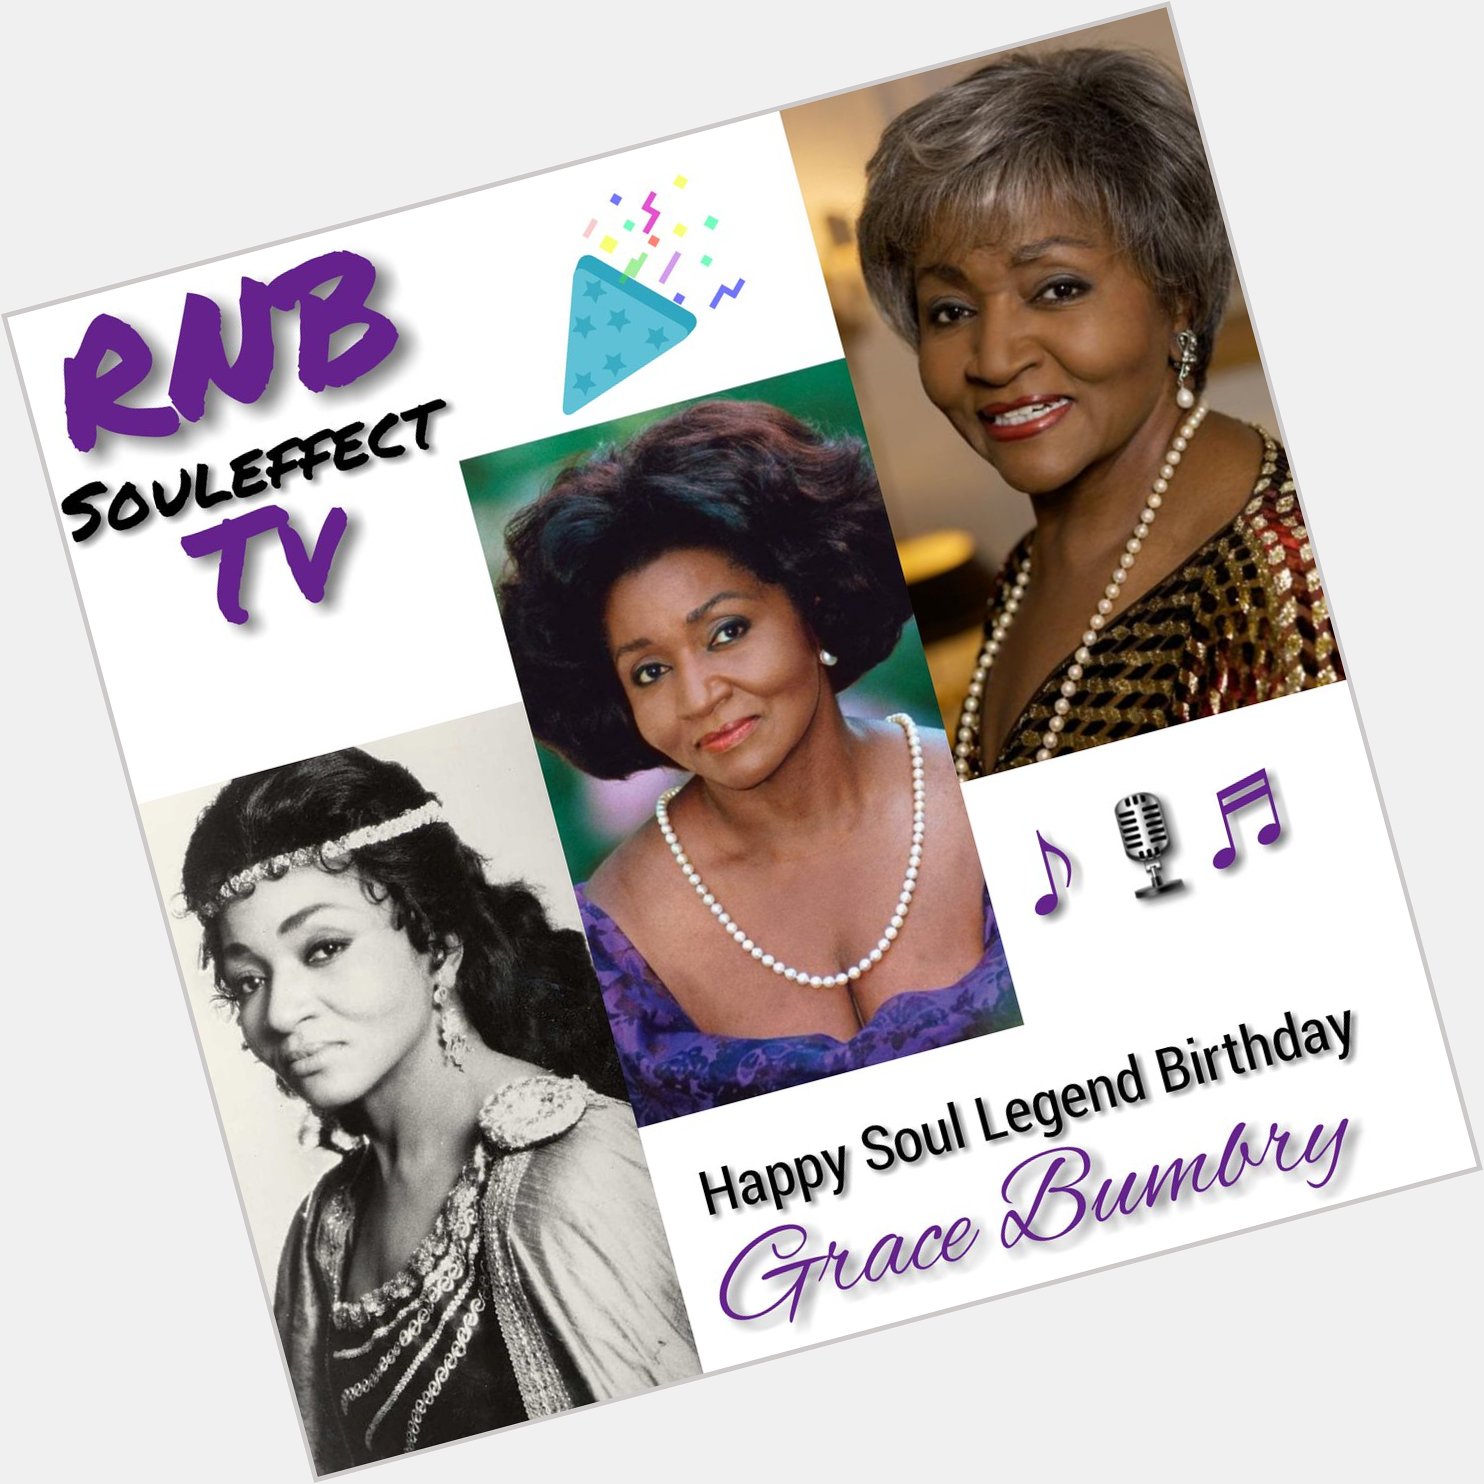 Happy Soul Legend Birthday Grace Bumbry 